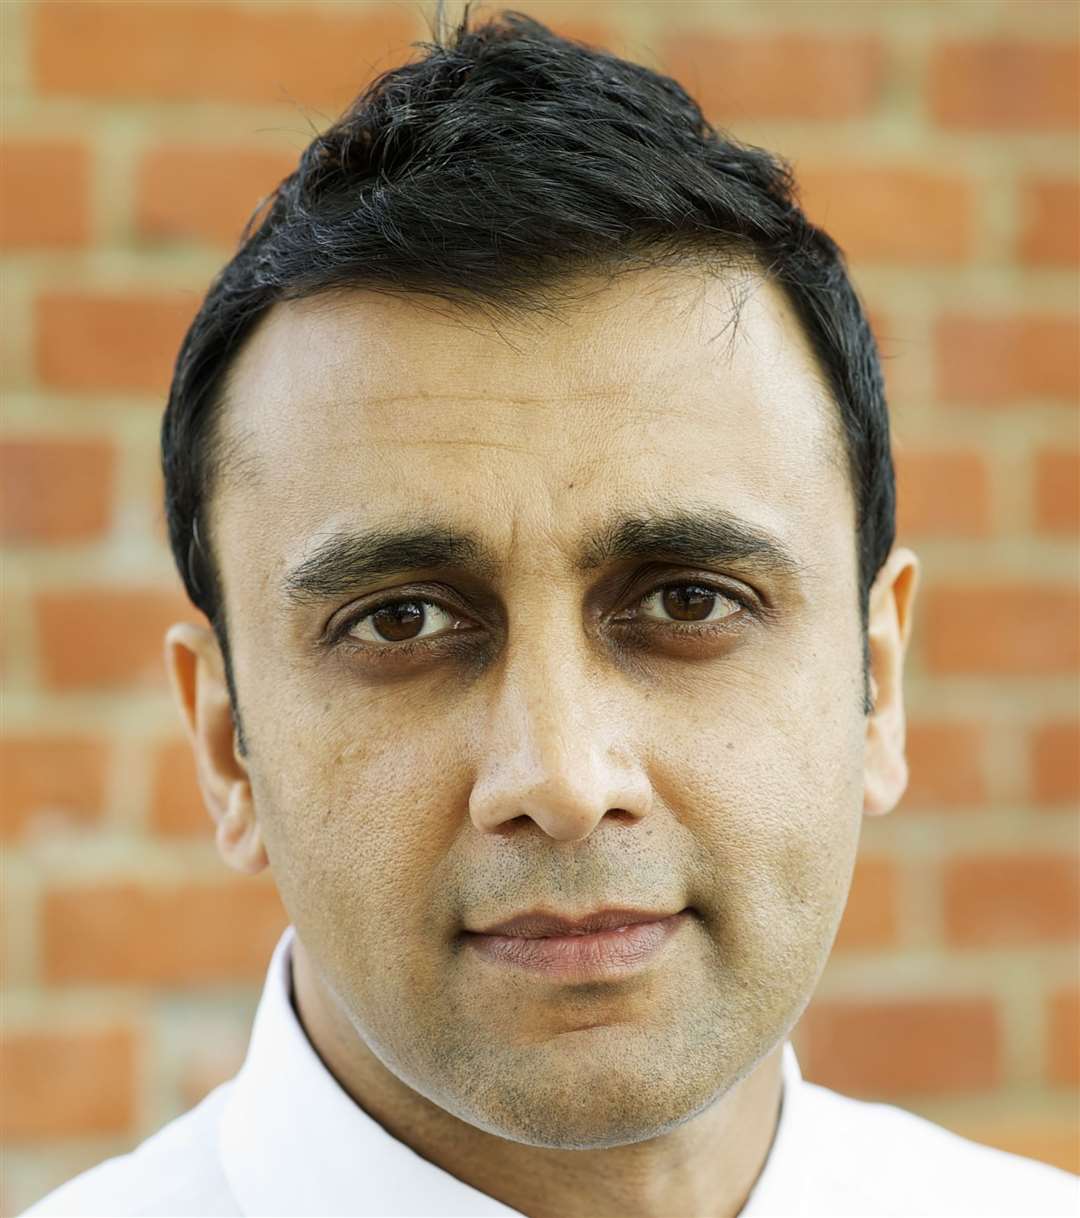 Dr Manpinder Singh Sahota, of Pelham Medical Practice, Gravesend, is urging people to turn up